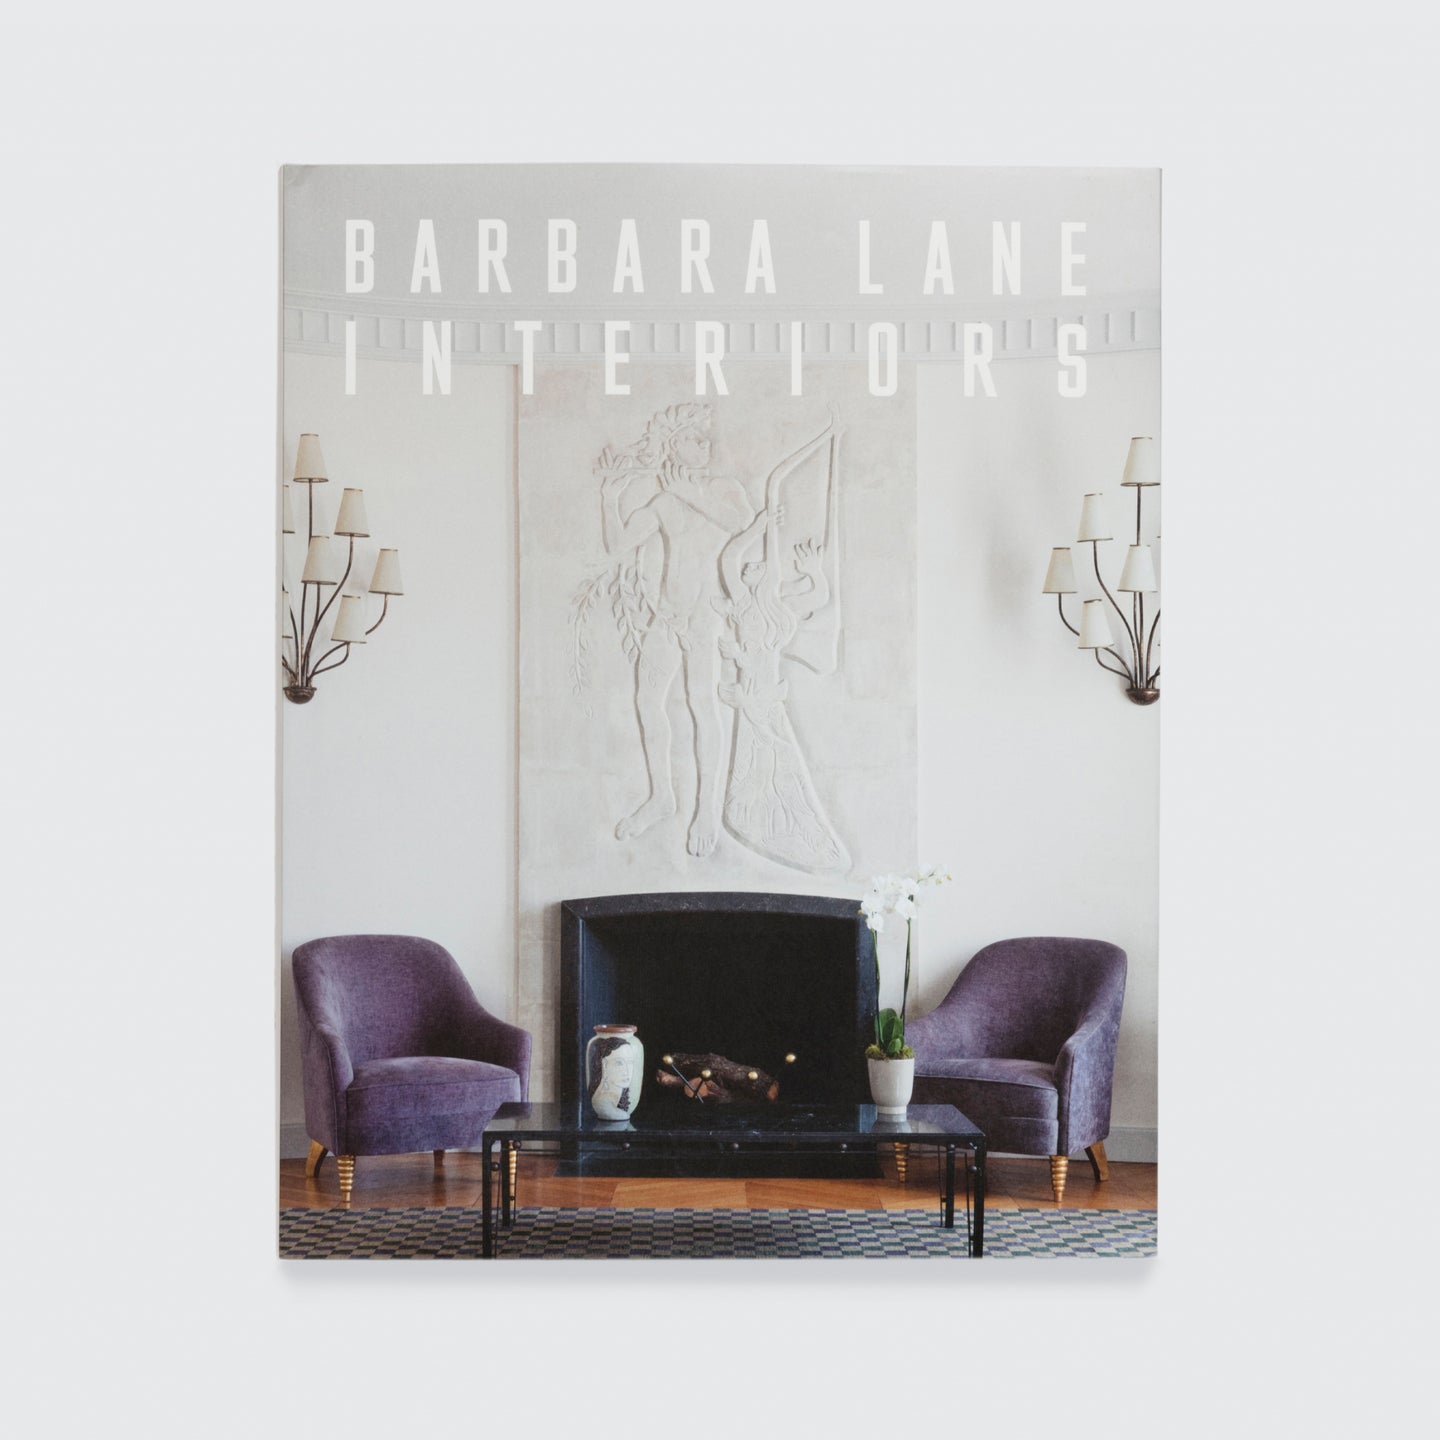 Barbara Lane Interiors